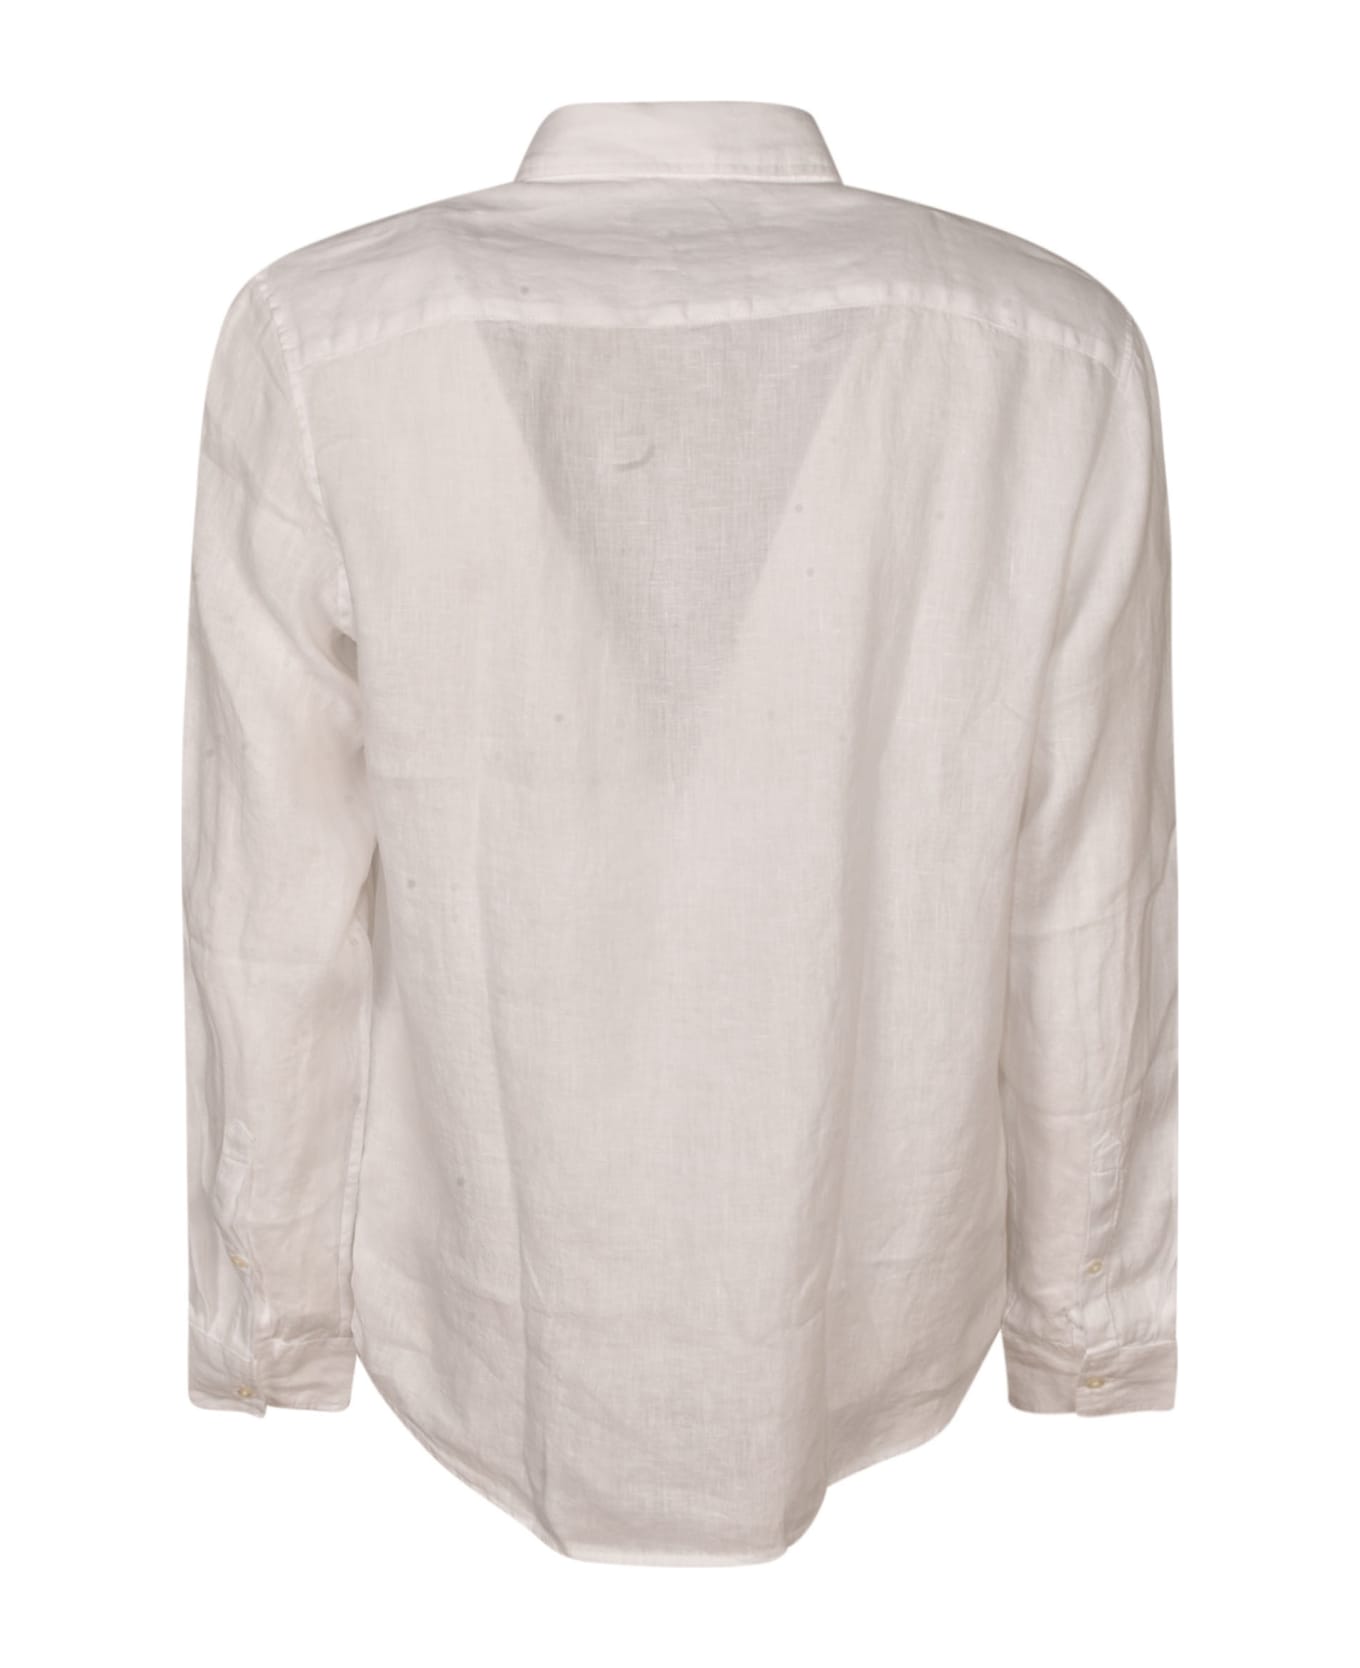 Michael Kors Classic Plain Shirt - White シャツ